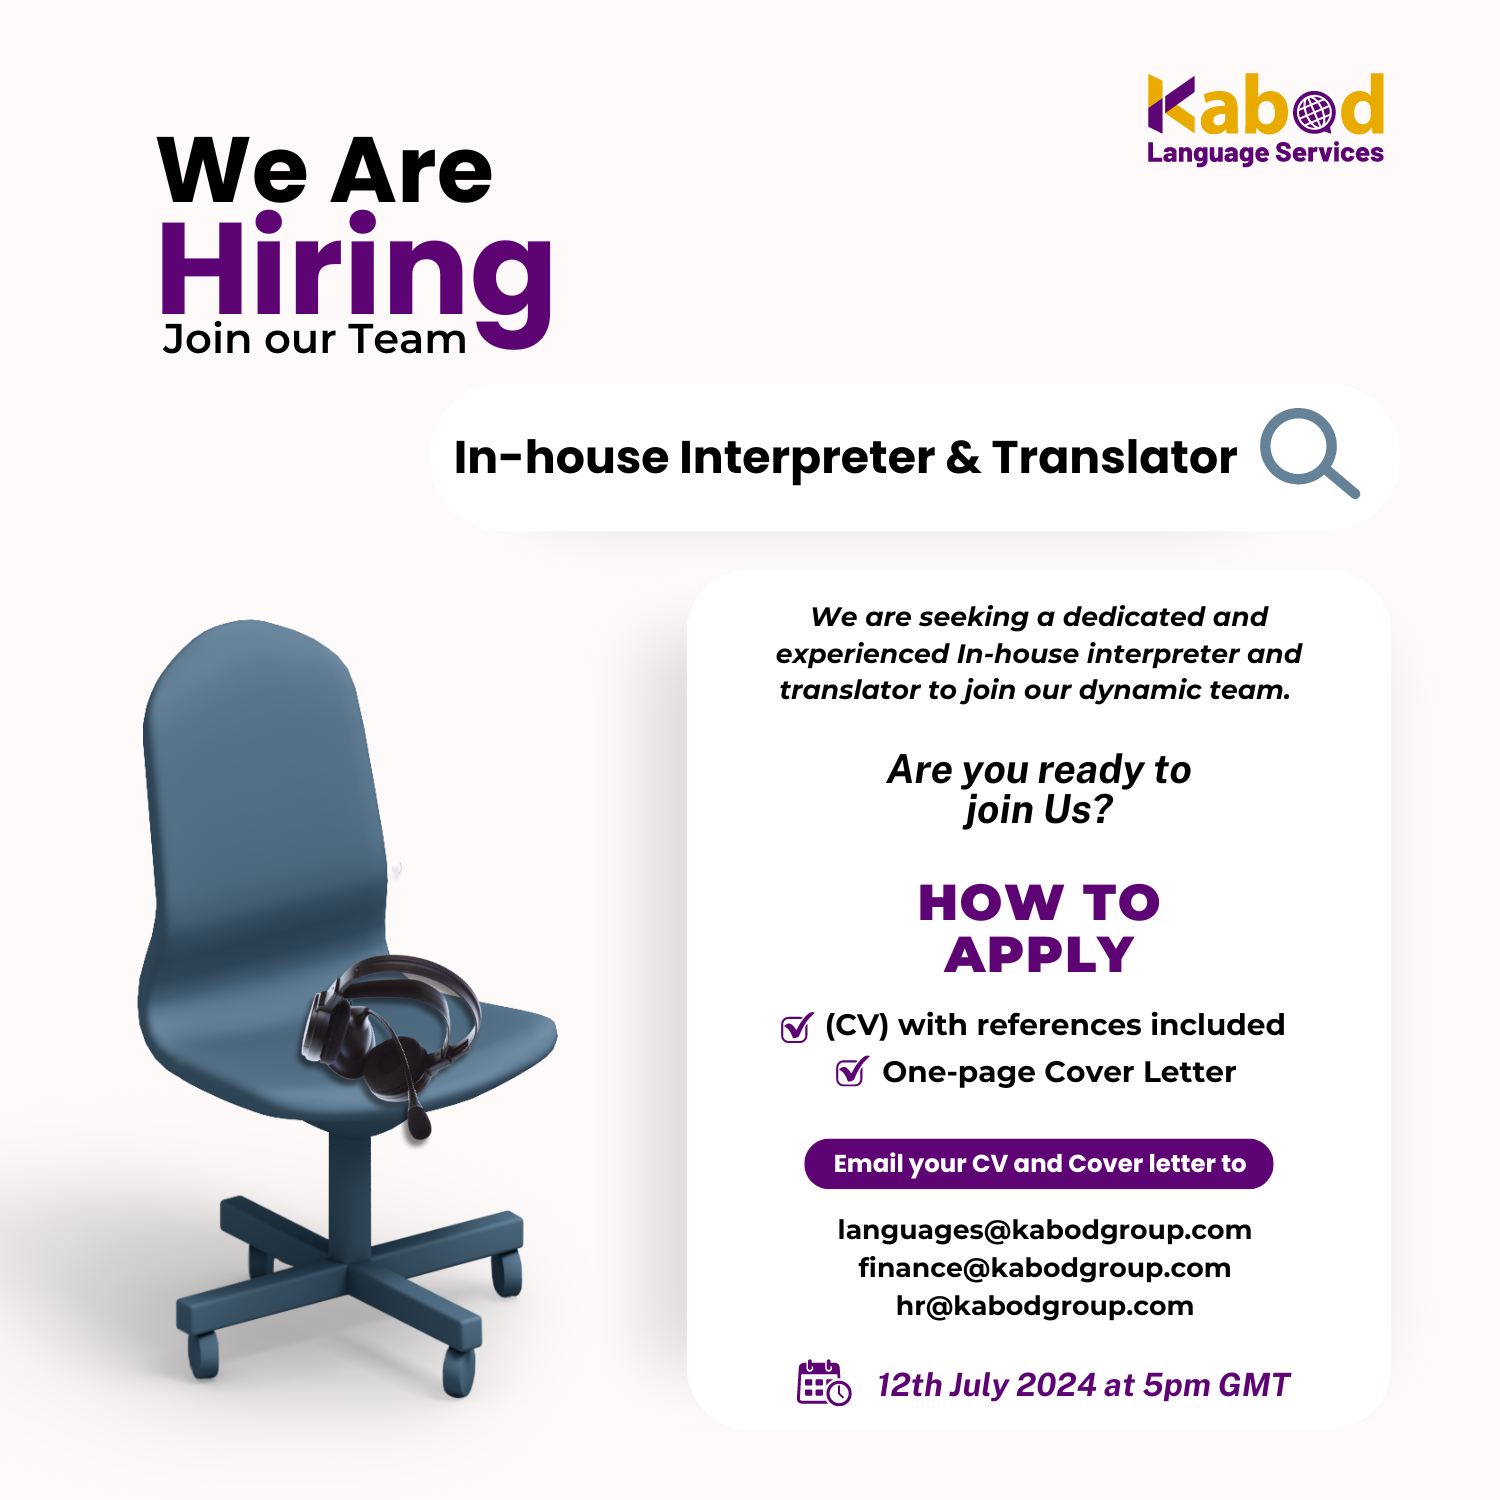 Vacancy: In-house Interpreter & Translator, Full time Location: Accra, Ghana Position: In-House Interpreter & Translator